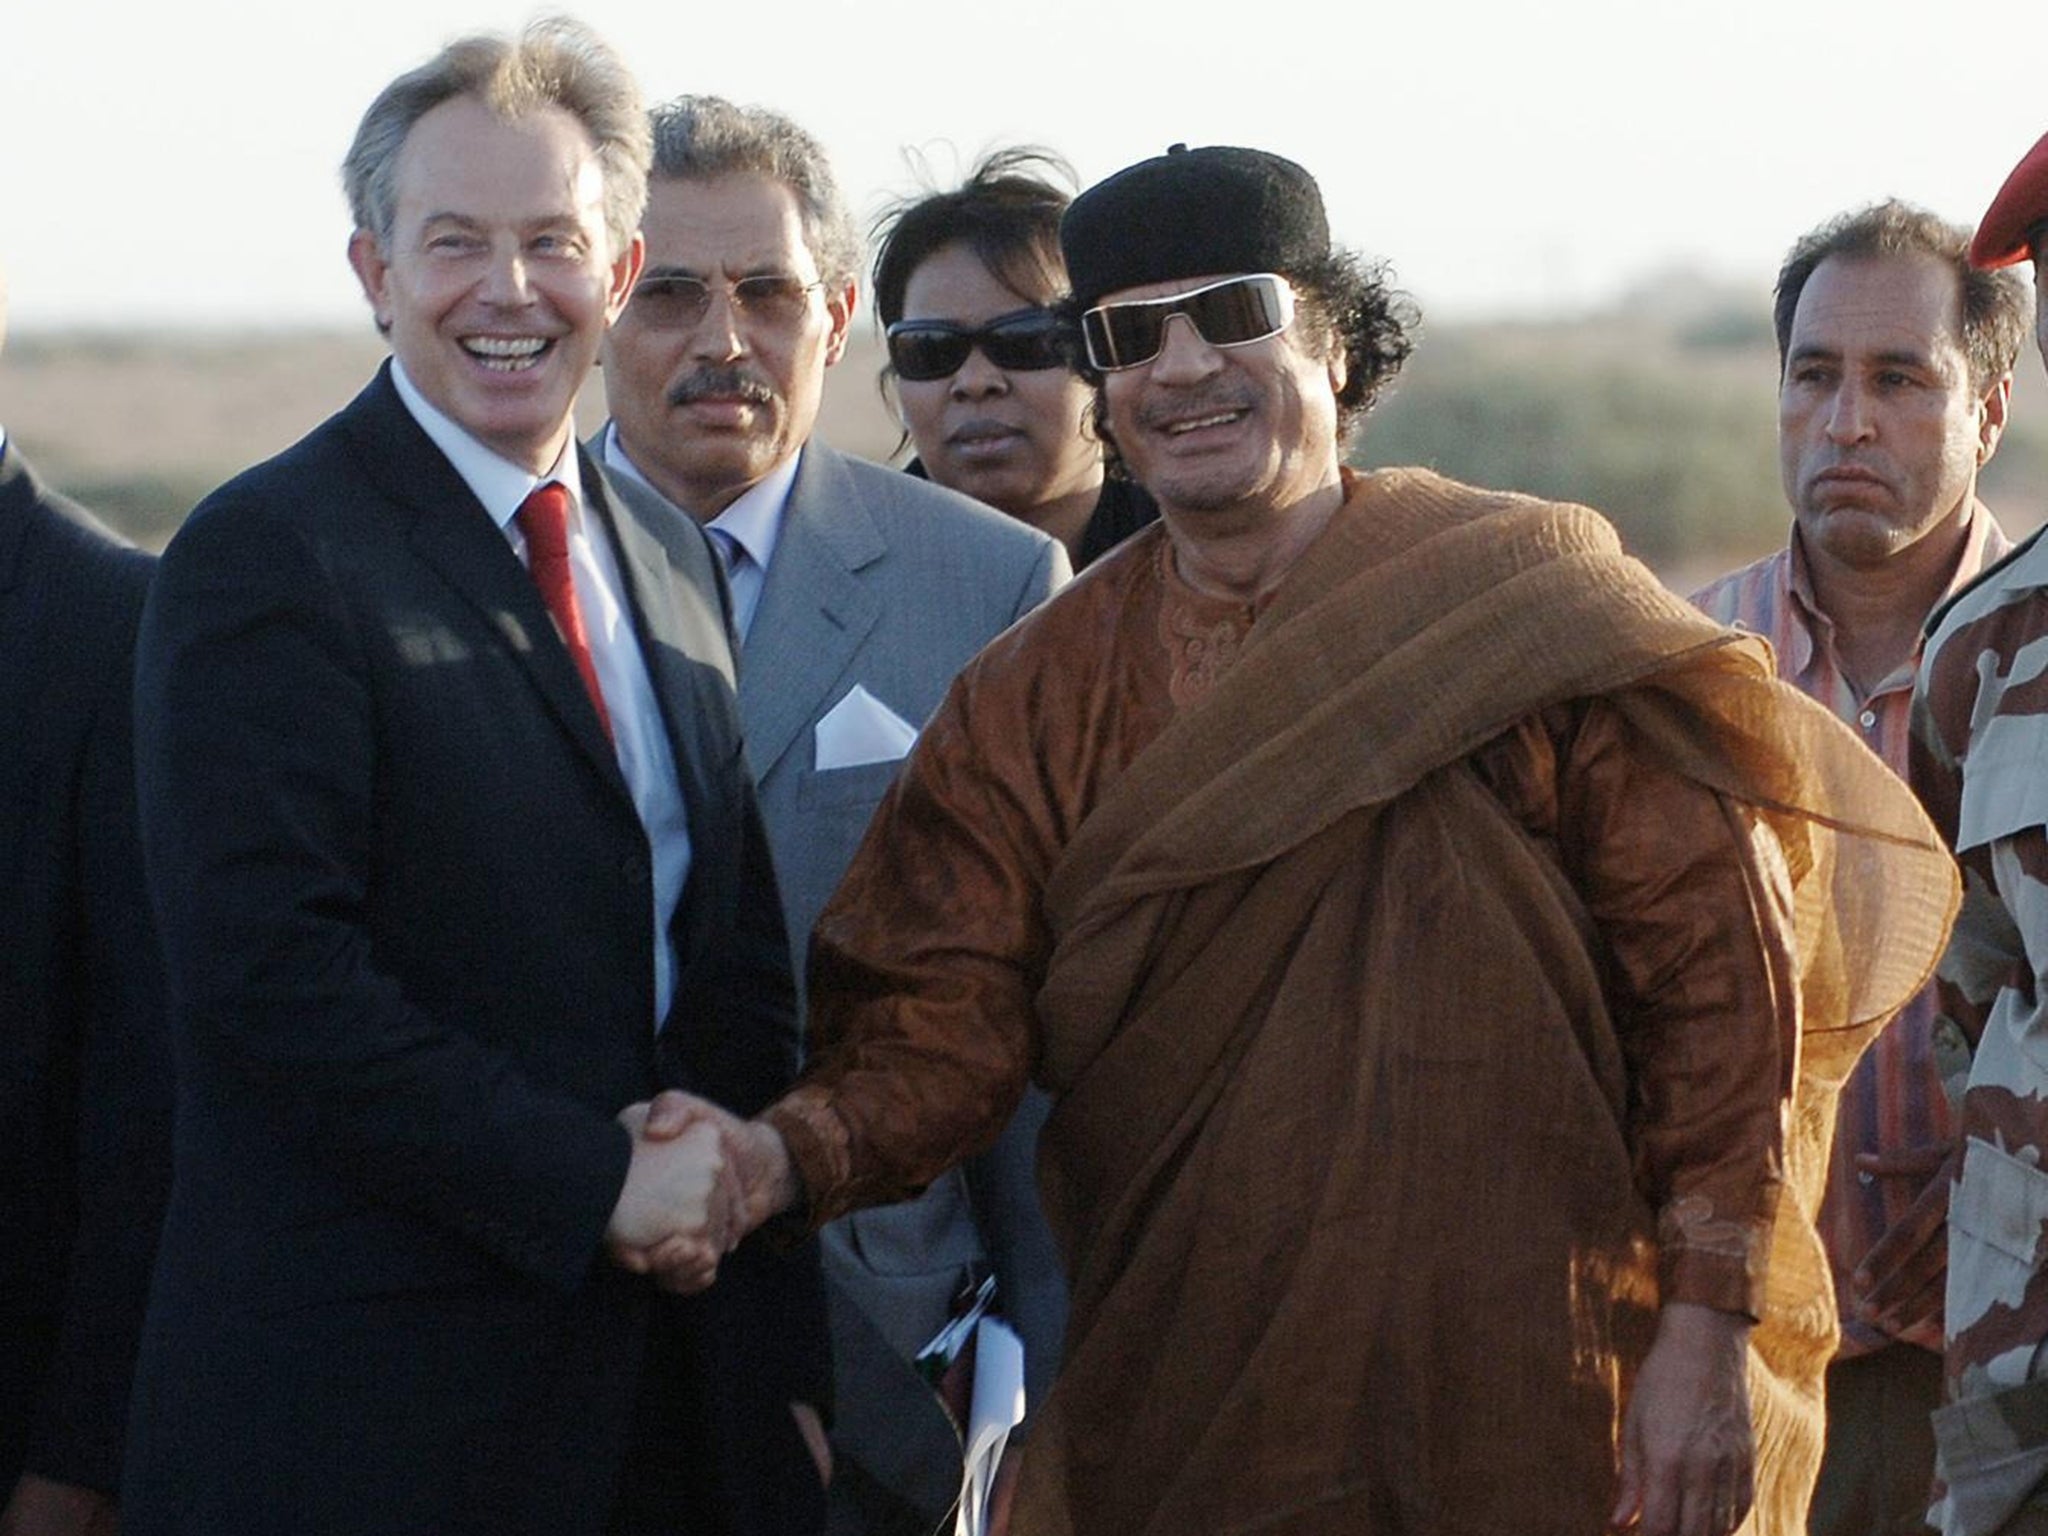 Tony Blair and Colonel Muammar Gaddafi meet in 2007